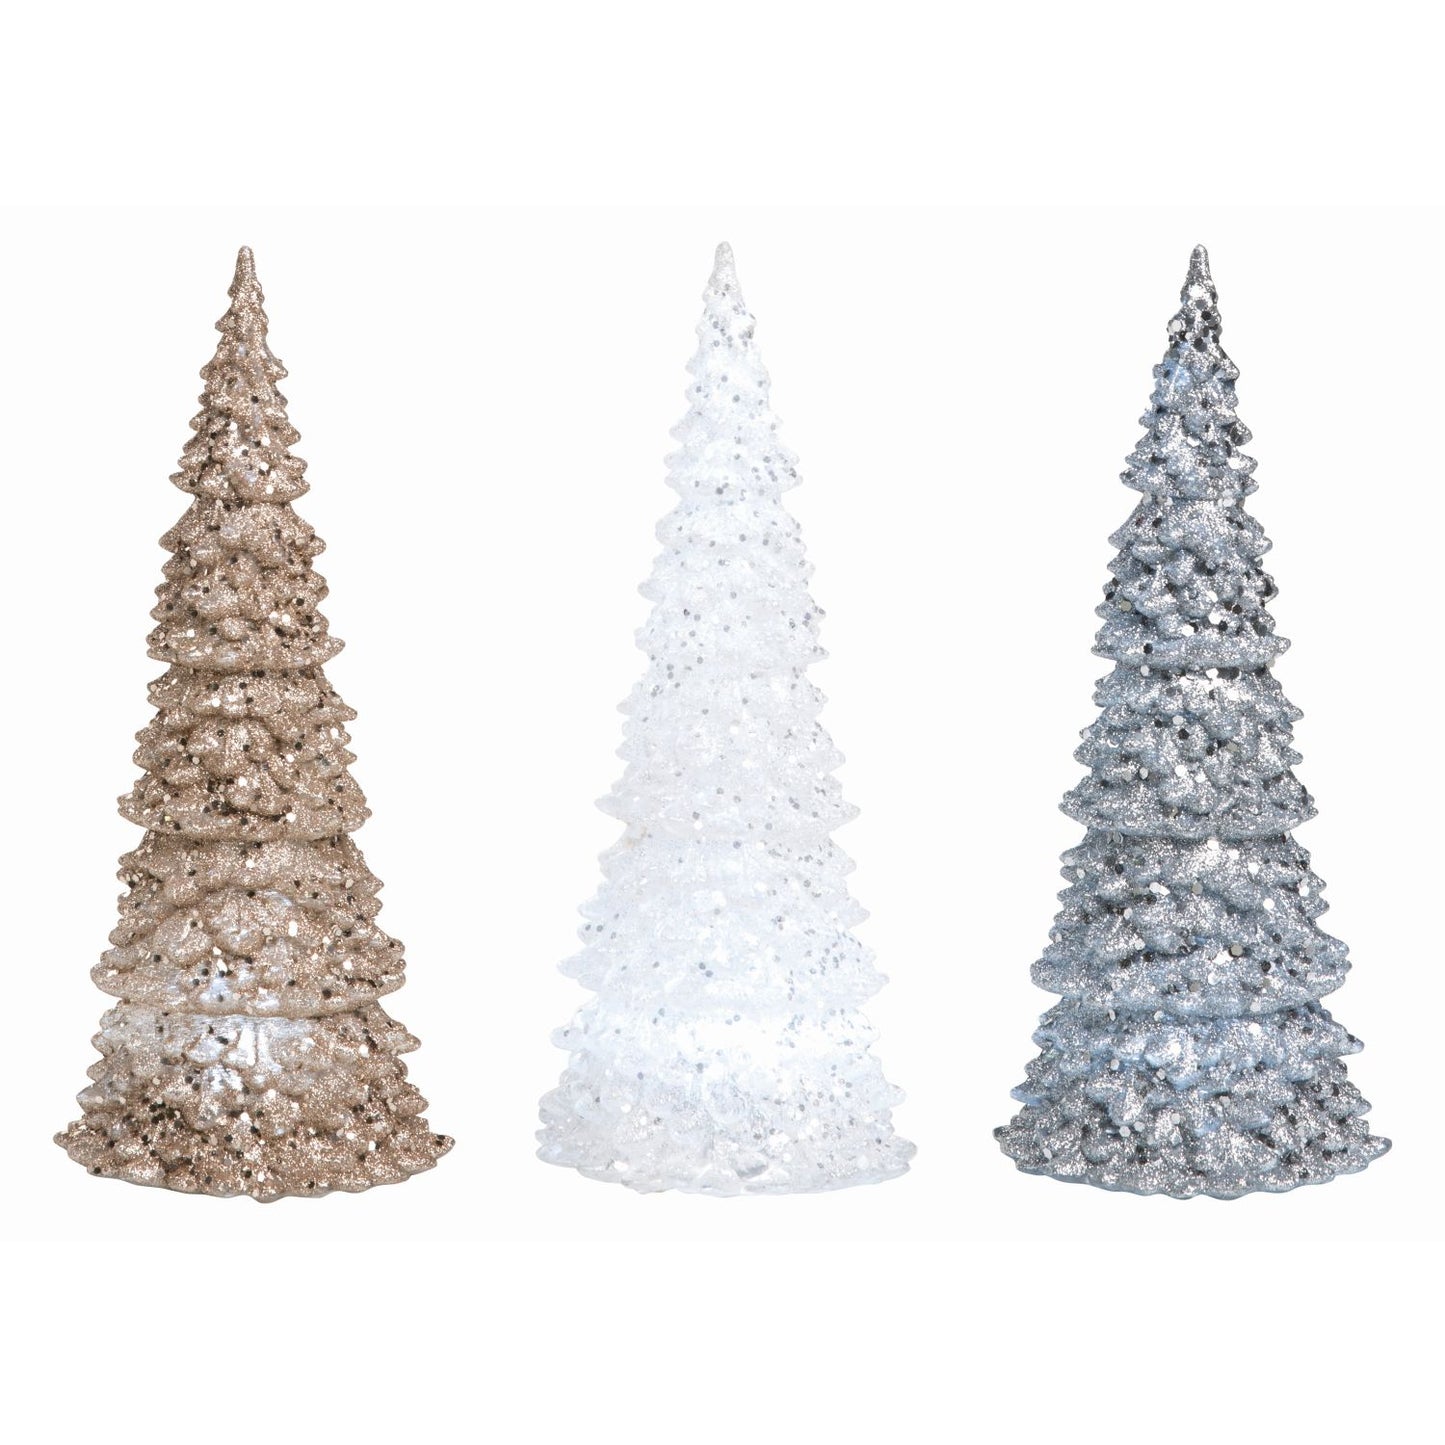 Transpac Large Acrylic Light Up Christmas Tree, Set Of 3, Assortment